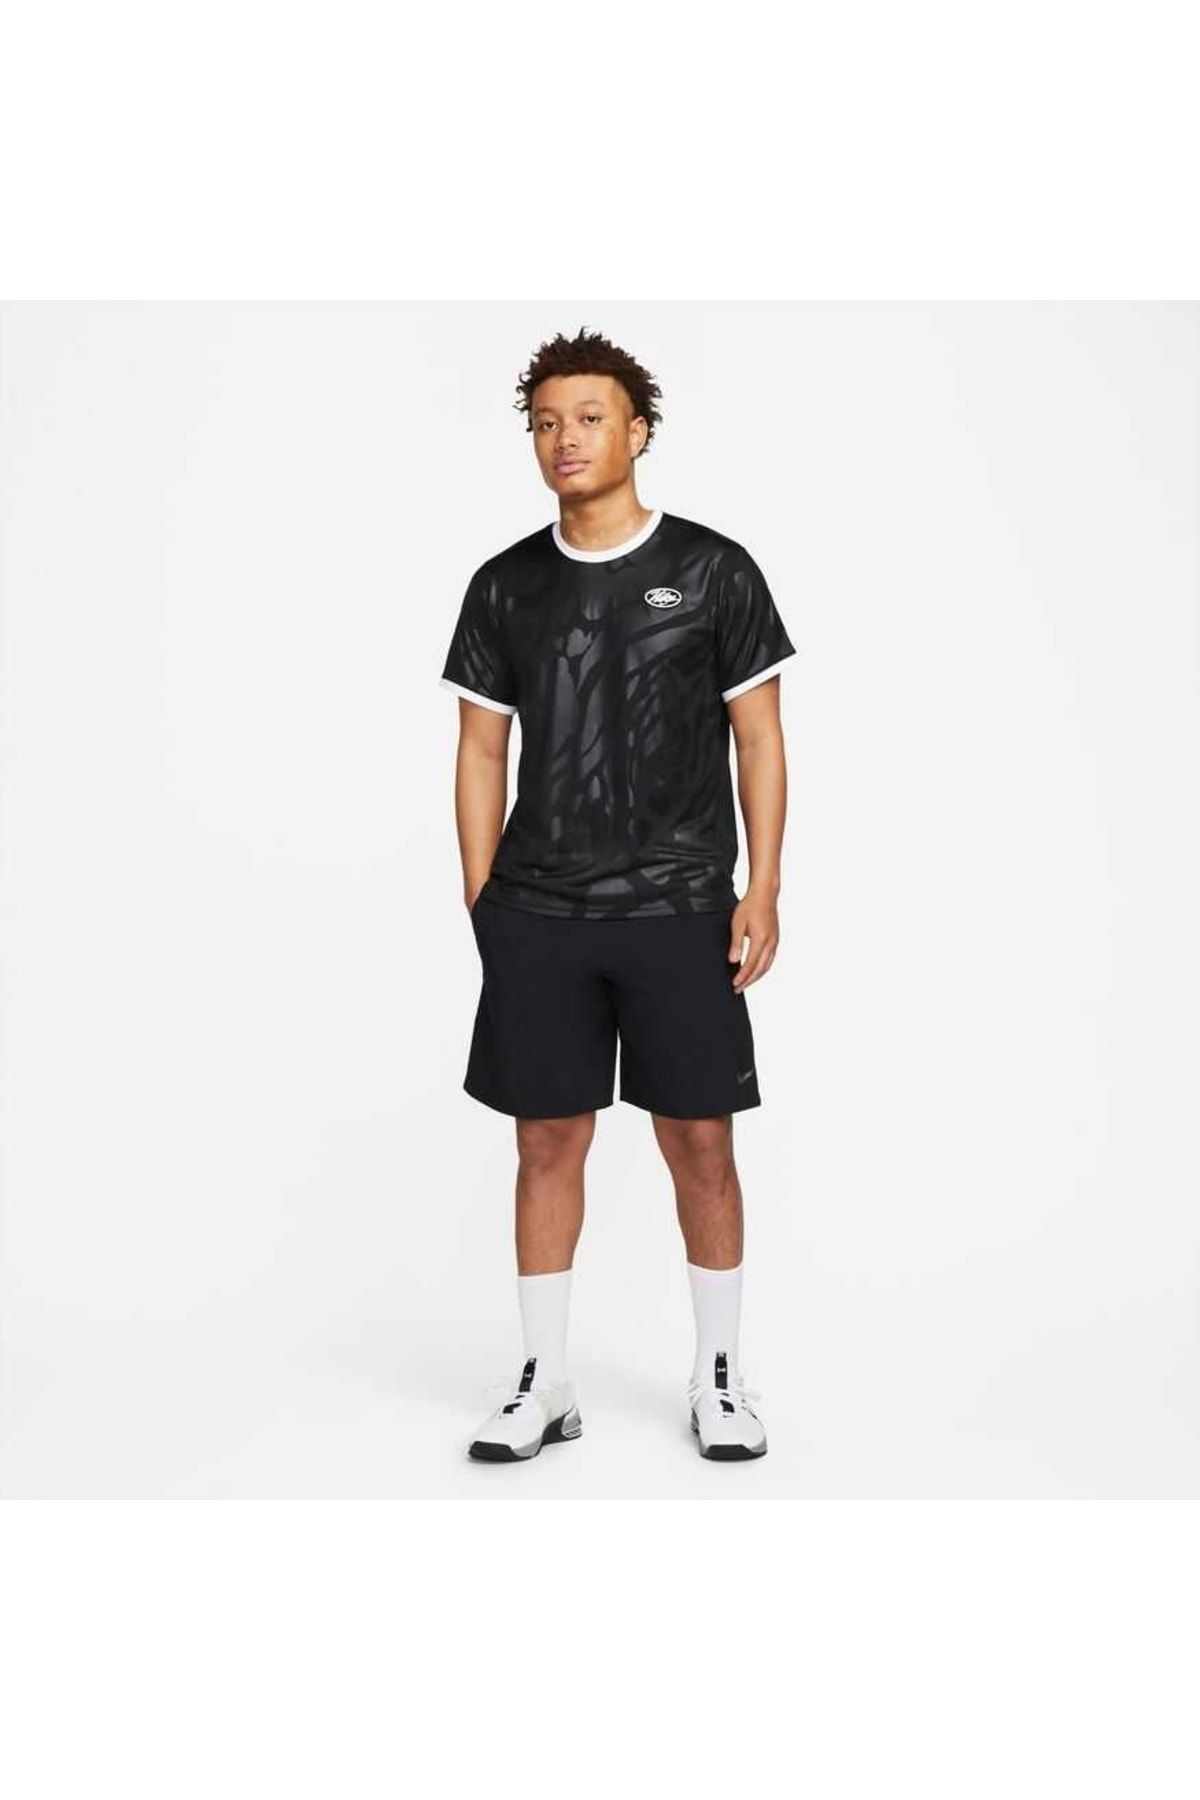 Nike Pro Dri Fit Men's Tight Fit Short Sleeve Top Slim Fit Body